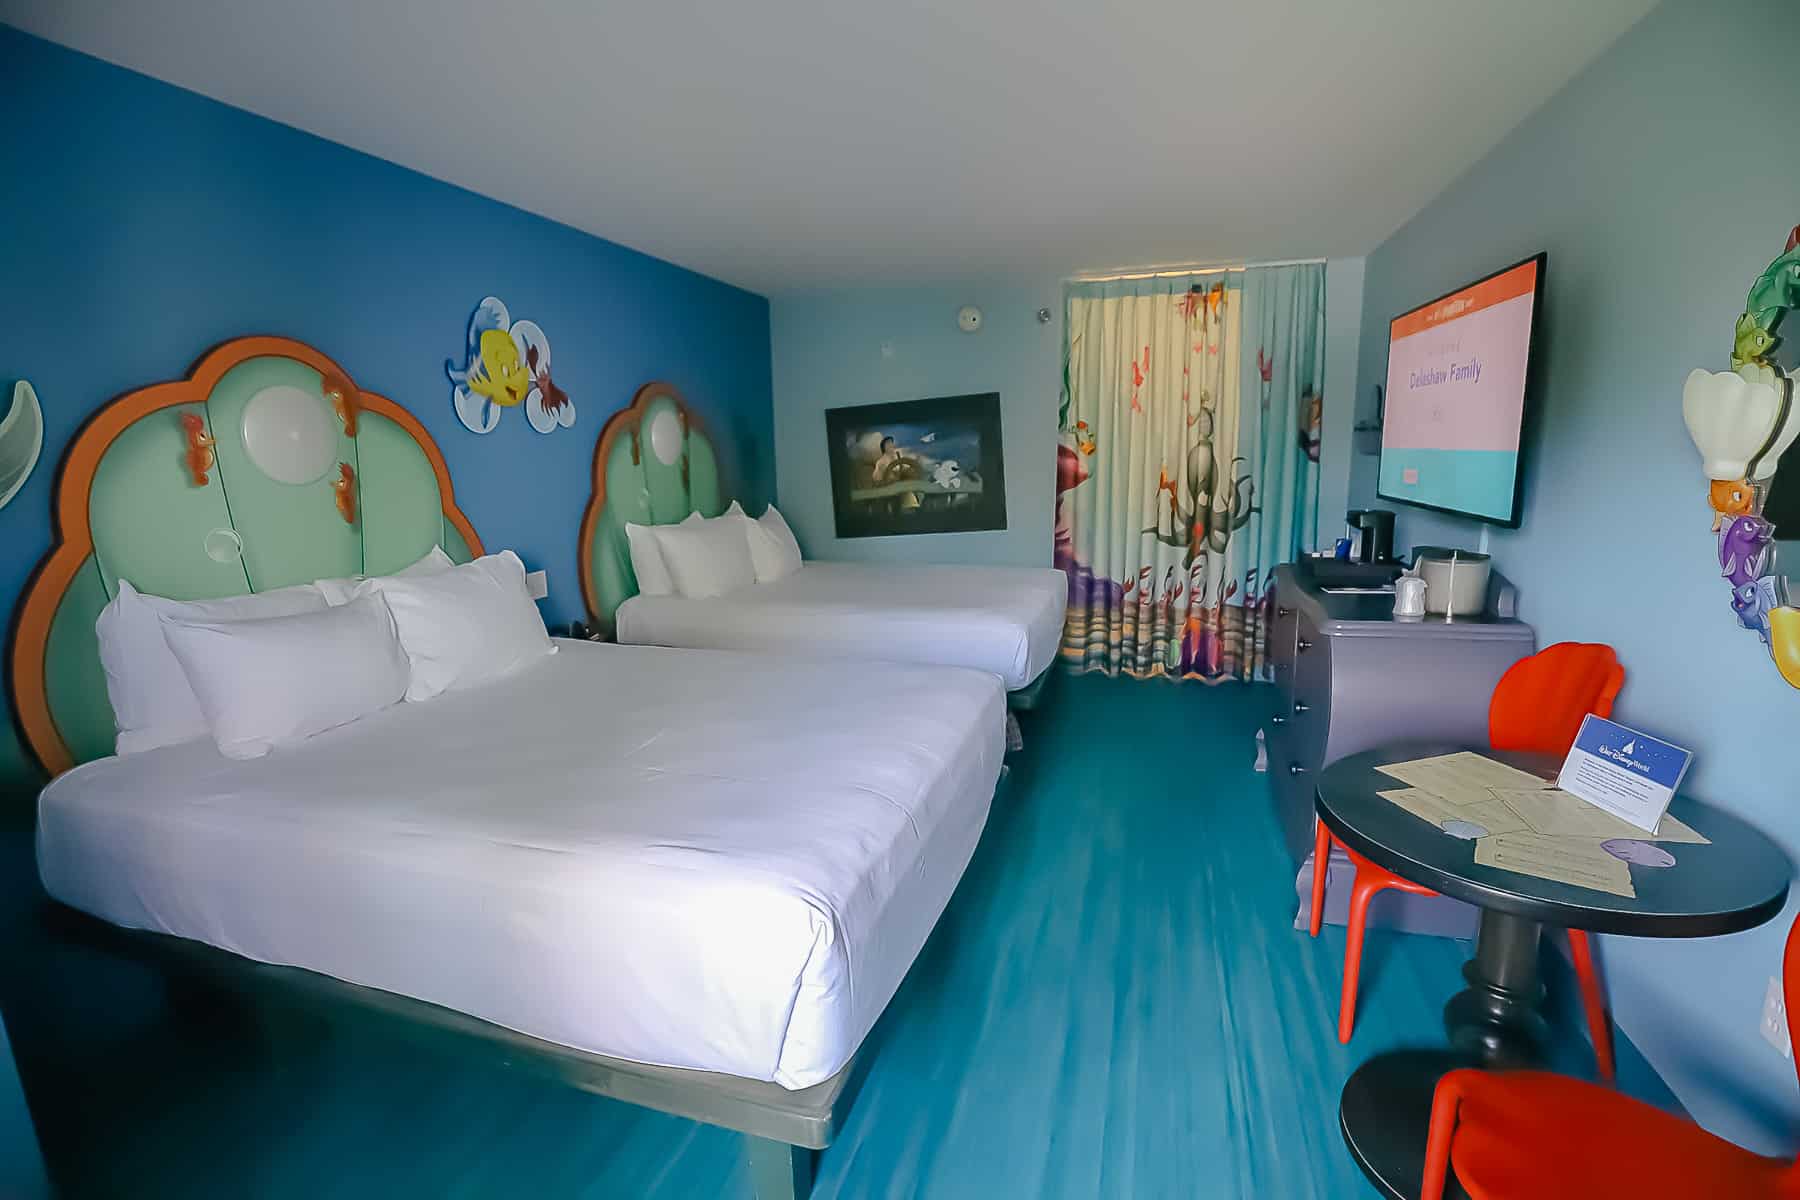 The Little Mermaid room at Disney's Art of Animation Resort 